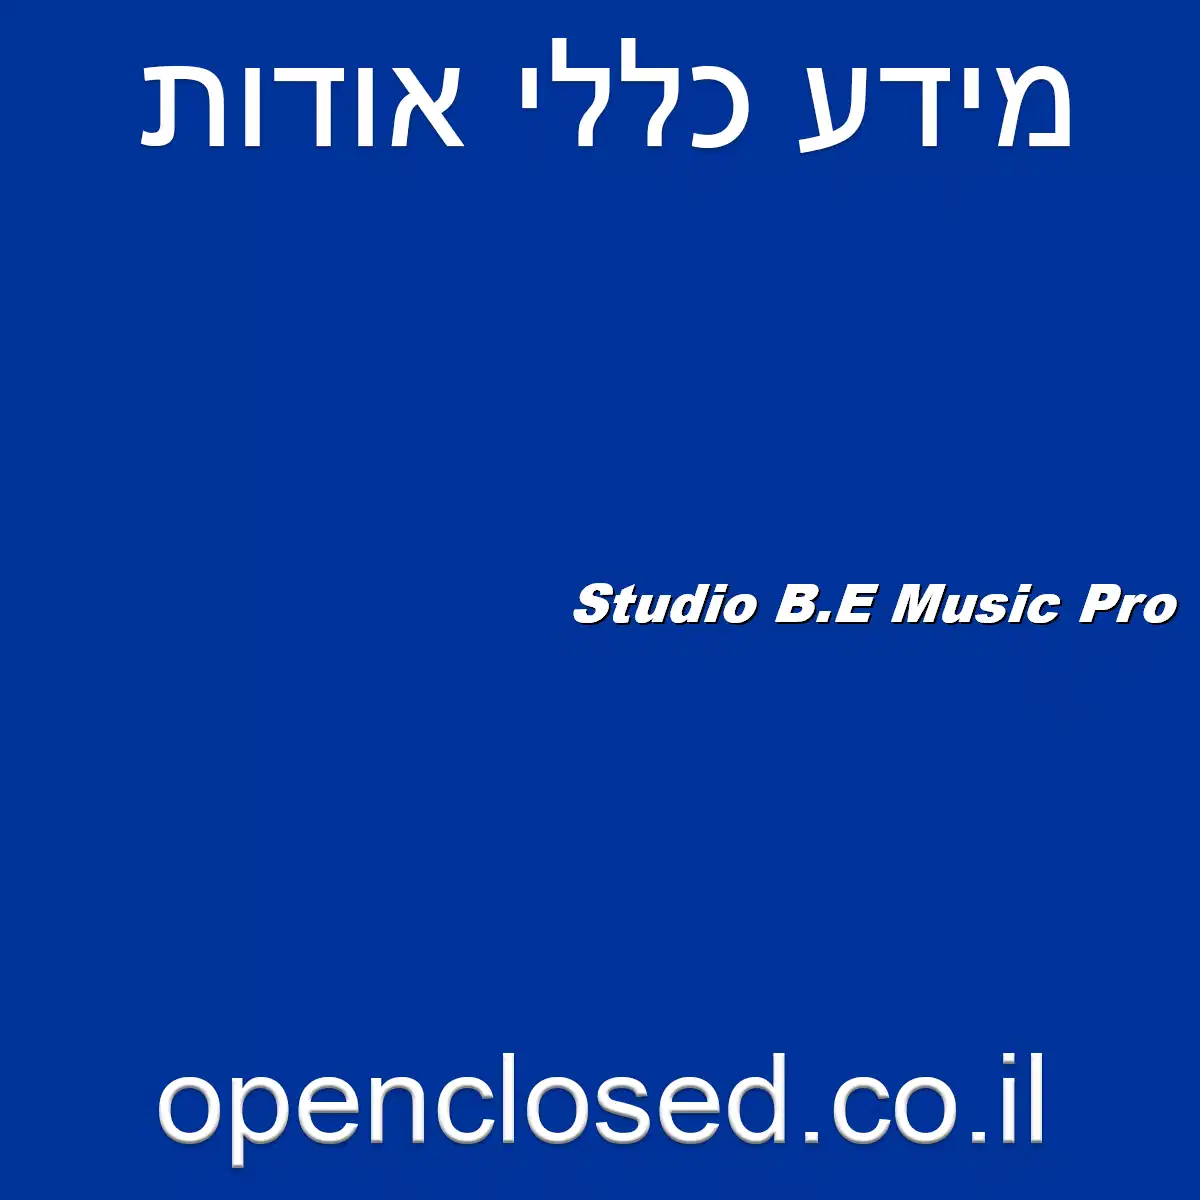 Studio B.E Music Pro